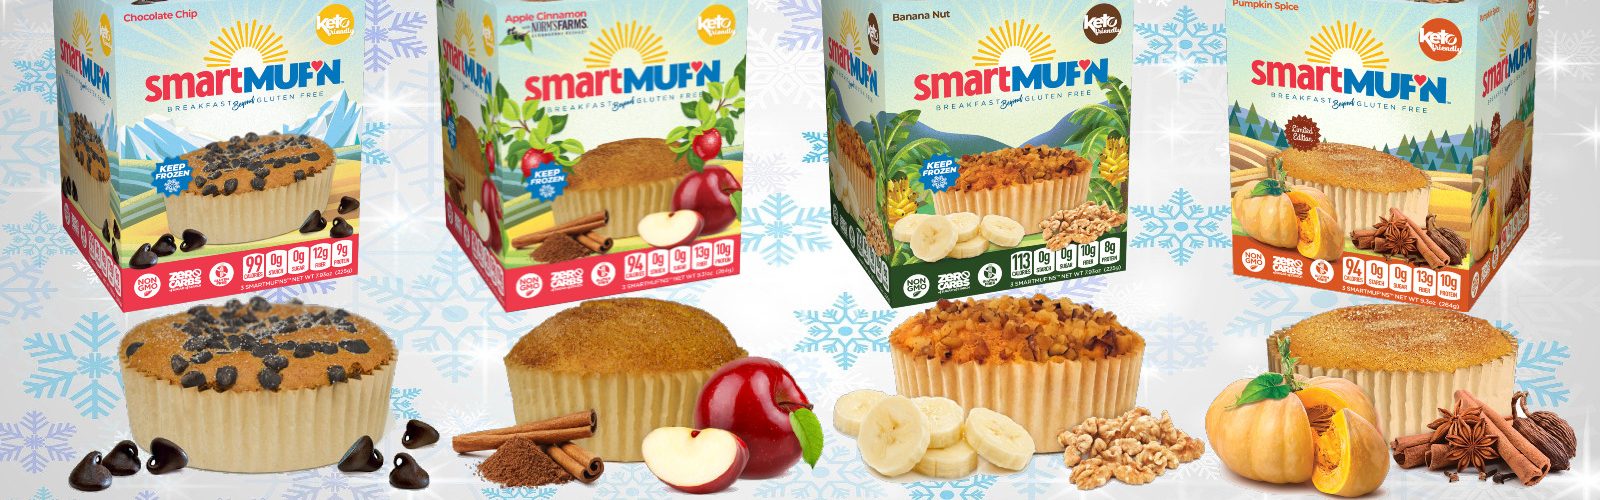 Smart Baking Company Smart Muffin Apple Cinnamon Box of 3